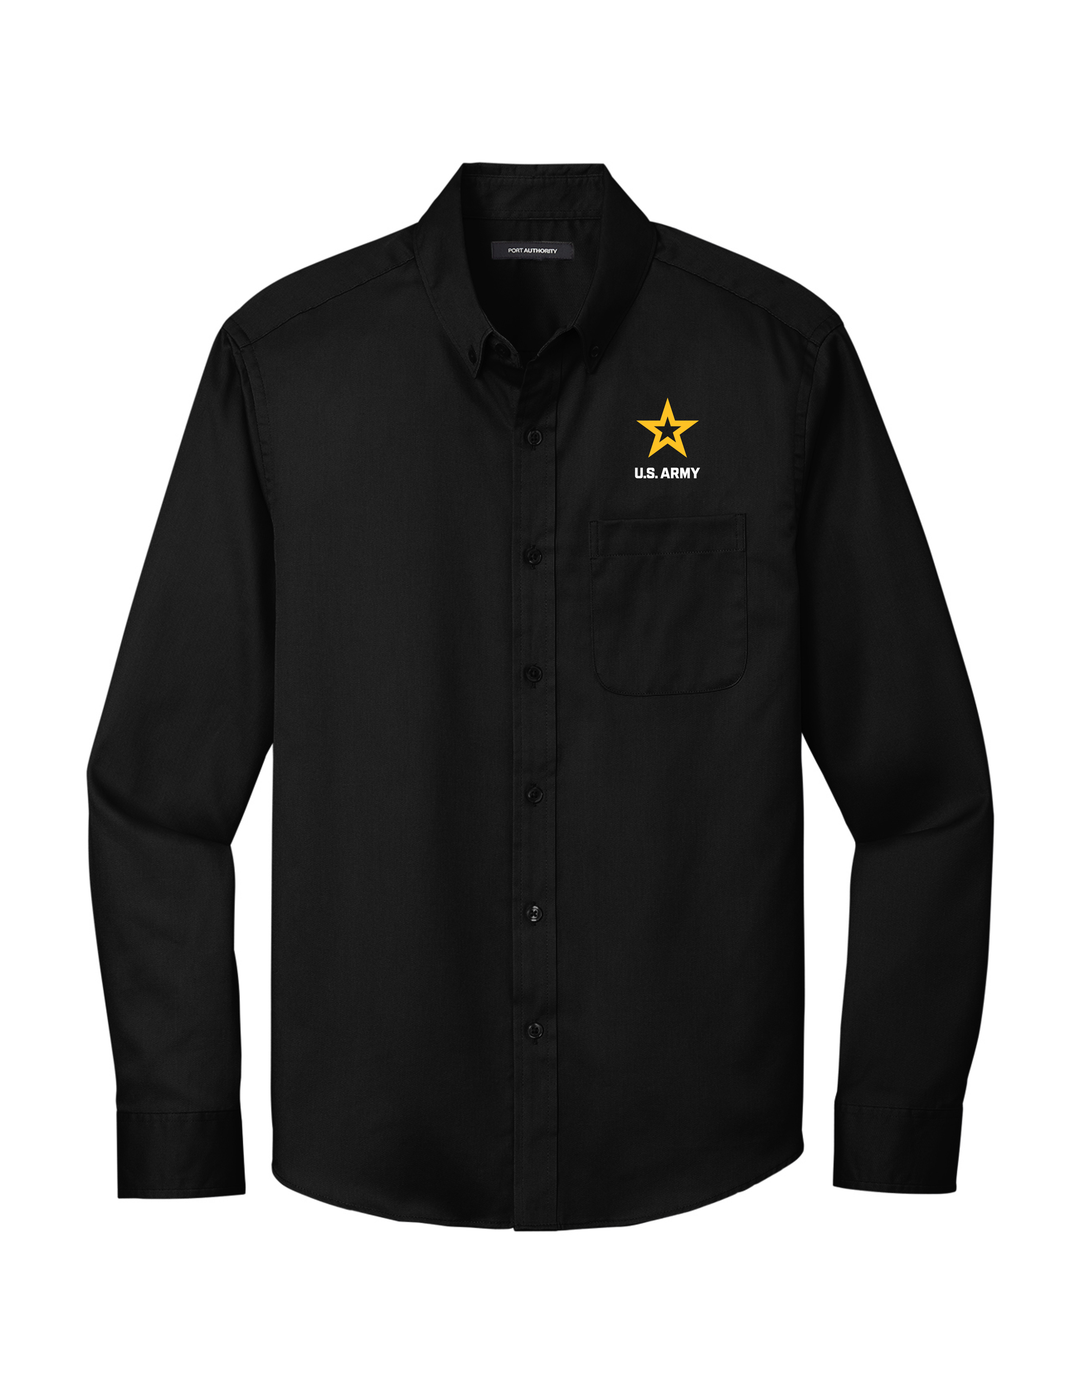 U.S. Army™ Button Up Shirt MENS (Black)